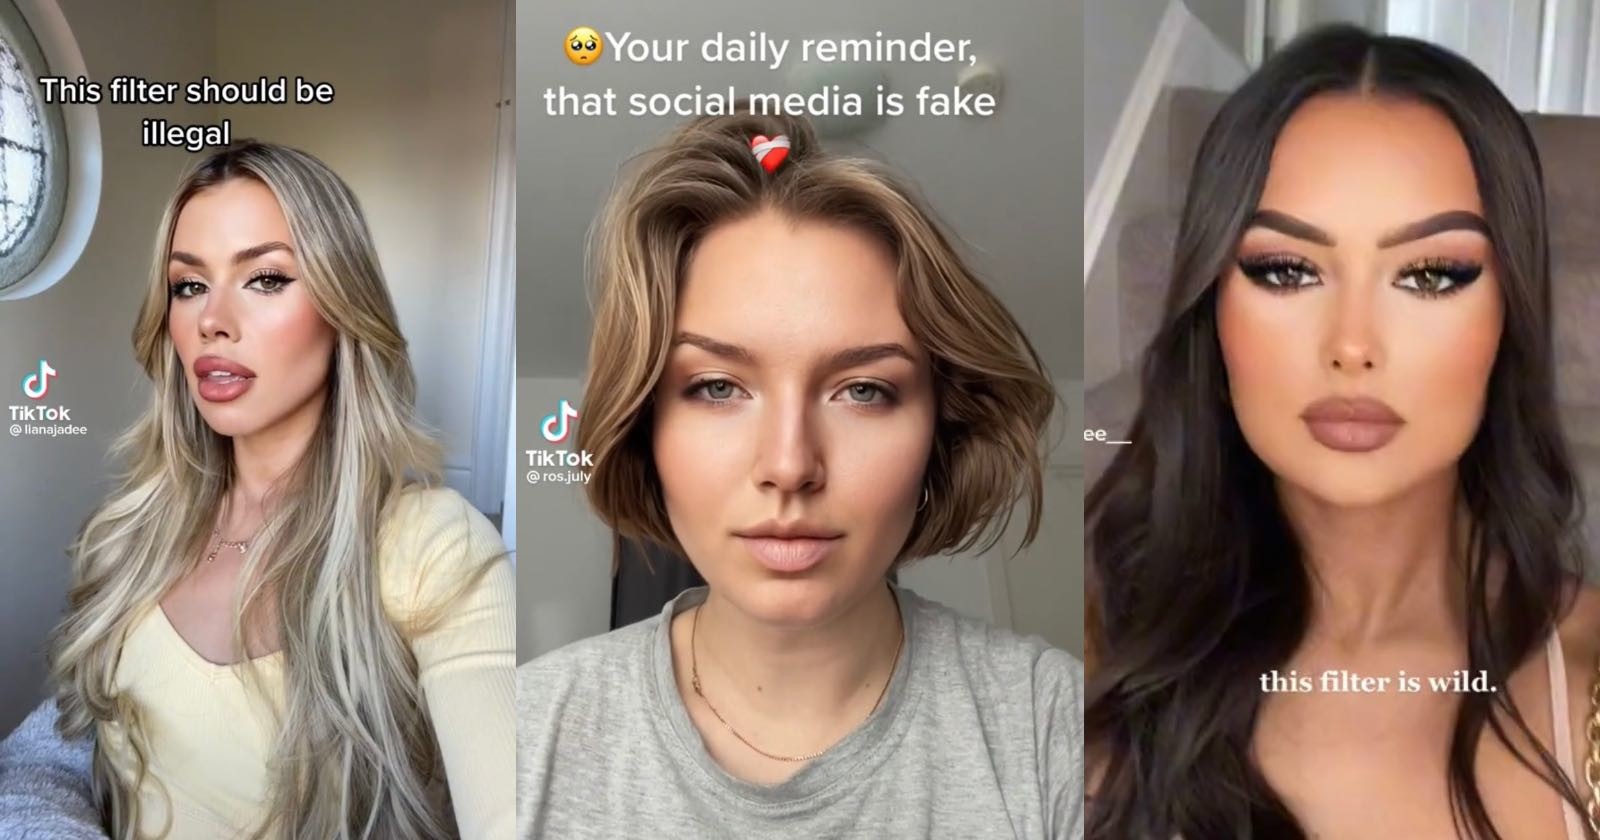  hyper-realistic face filter shocks tiktok users 